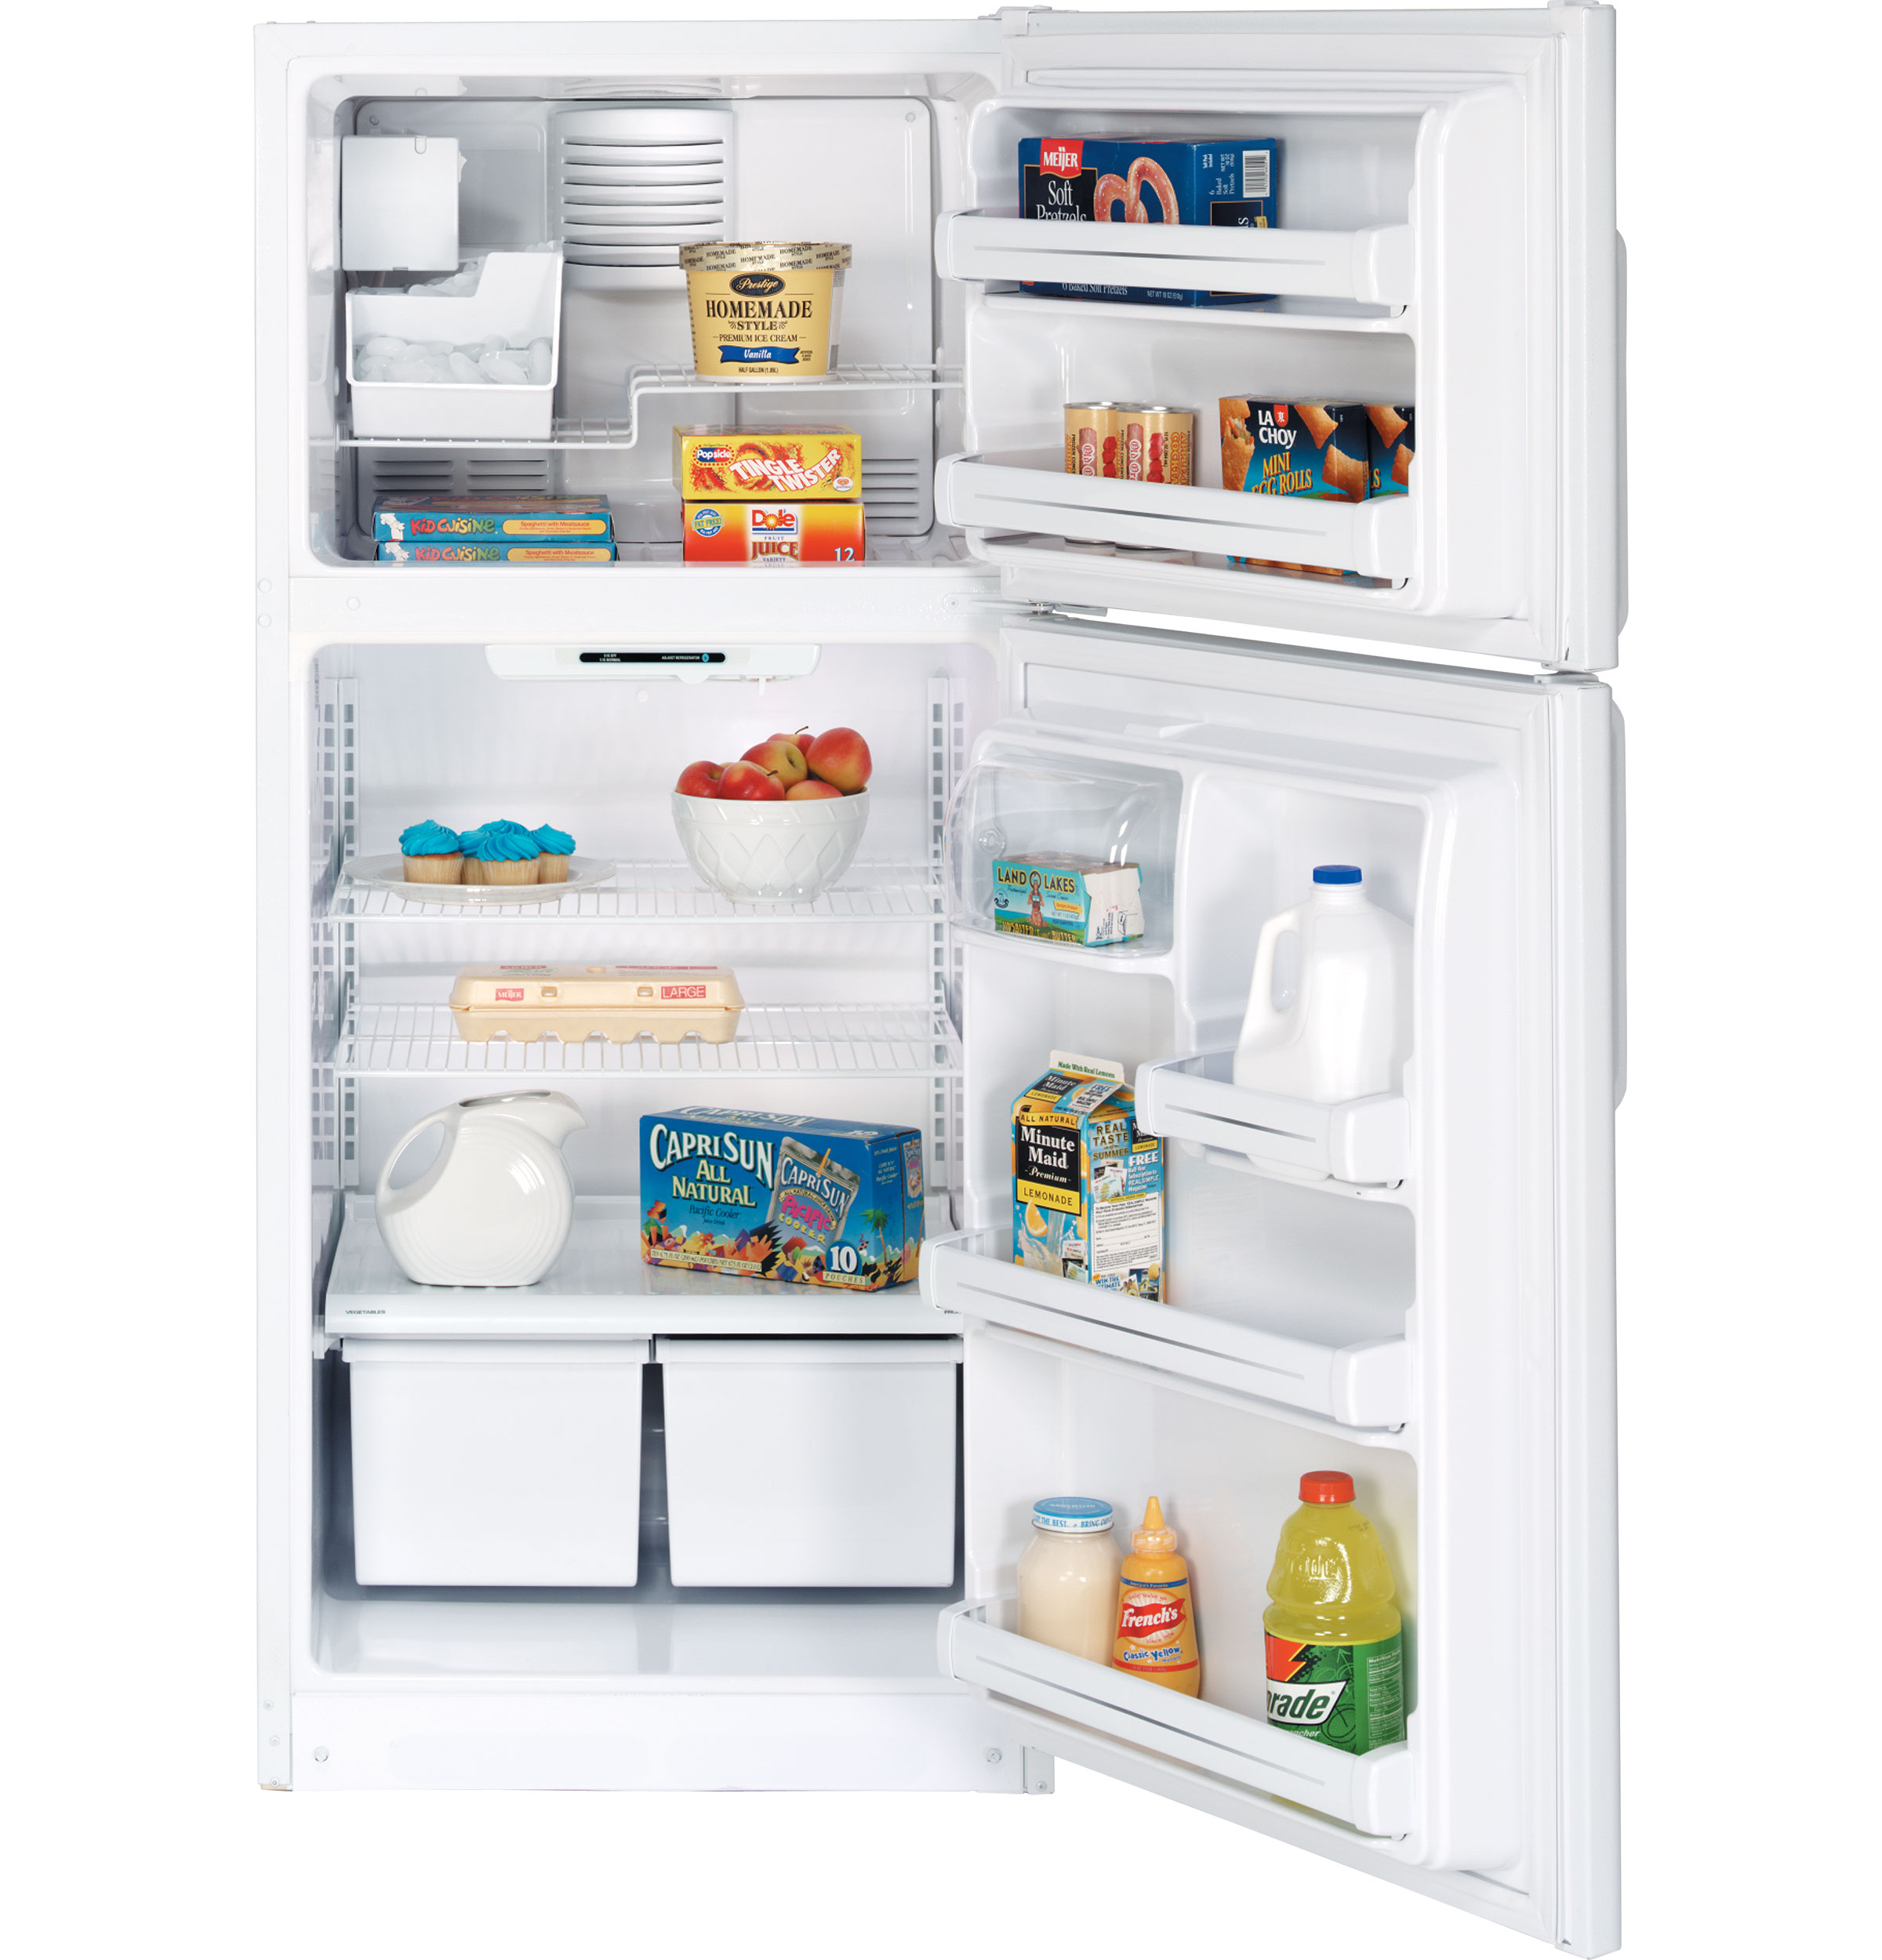 Hotpoint® 18.0 Cu. Ft. Top-Freezer Refrigerator